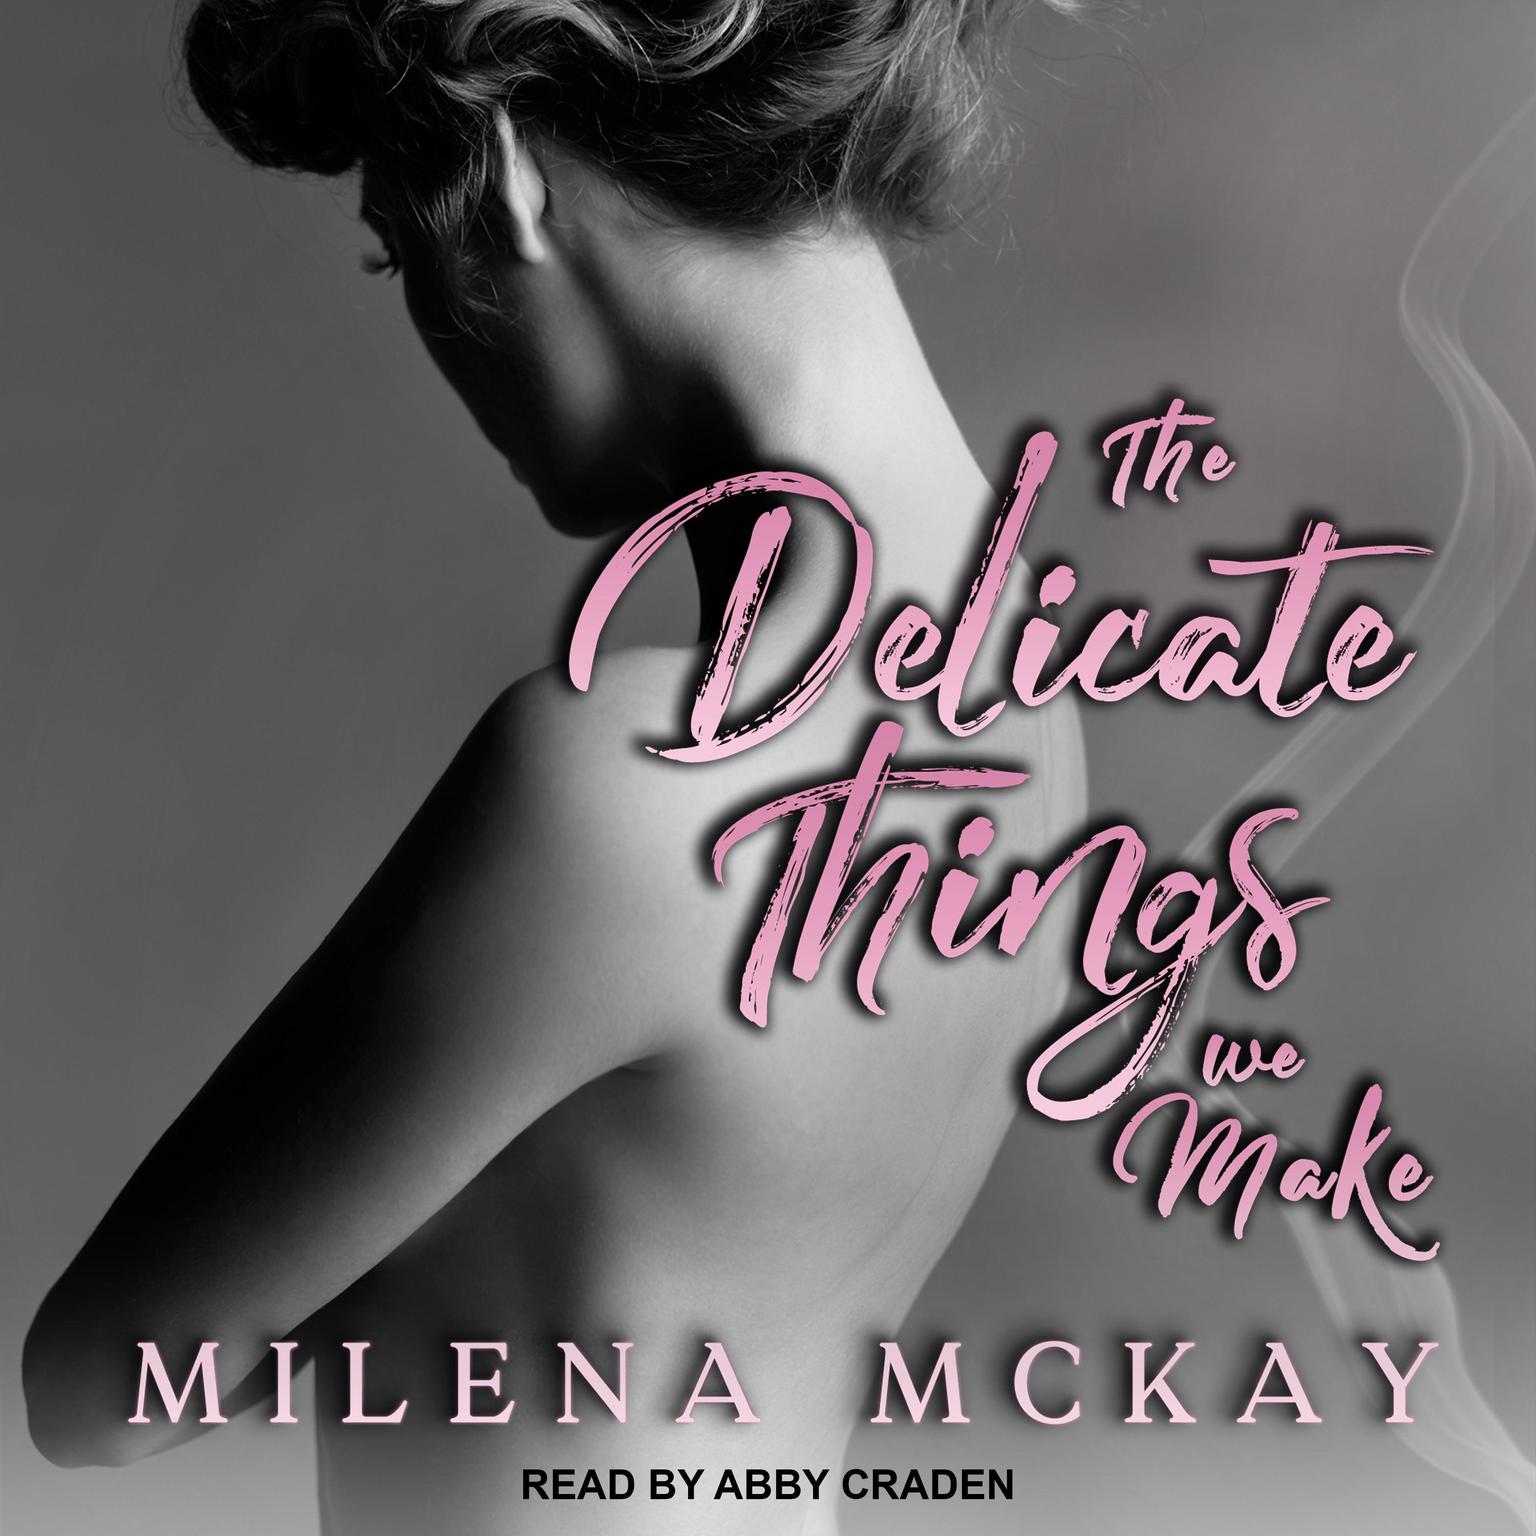 Milena McKay, Abby Craden: The Delicate Things We Make (AudiobookFormat, 2022, Tantor Audio)